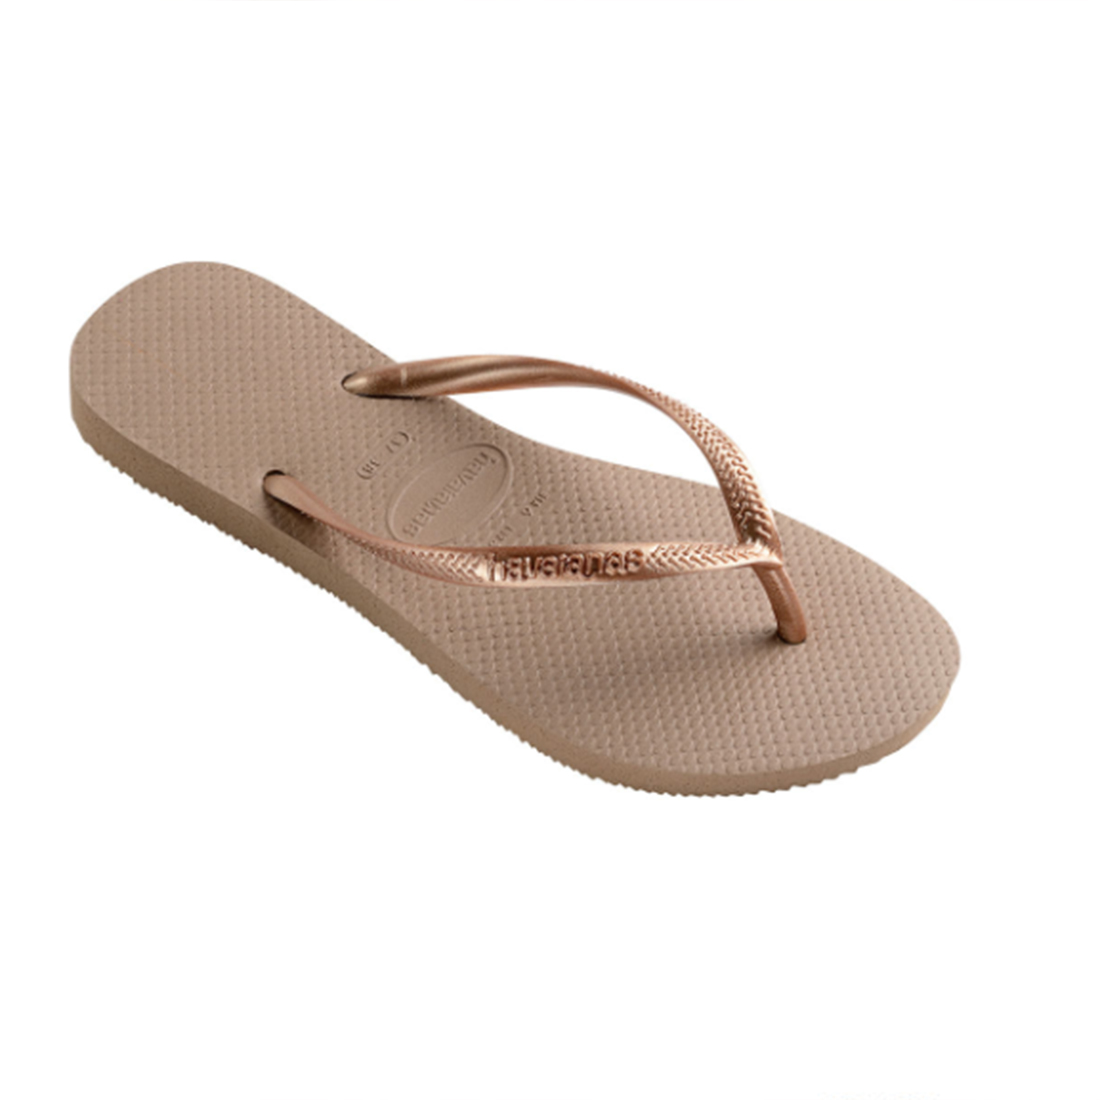 Havaianas Slim Sandals In Rosegold 81406